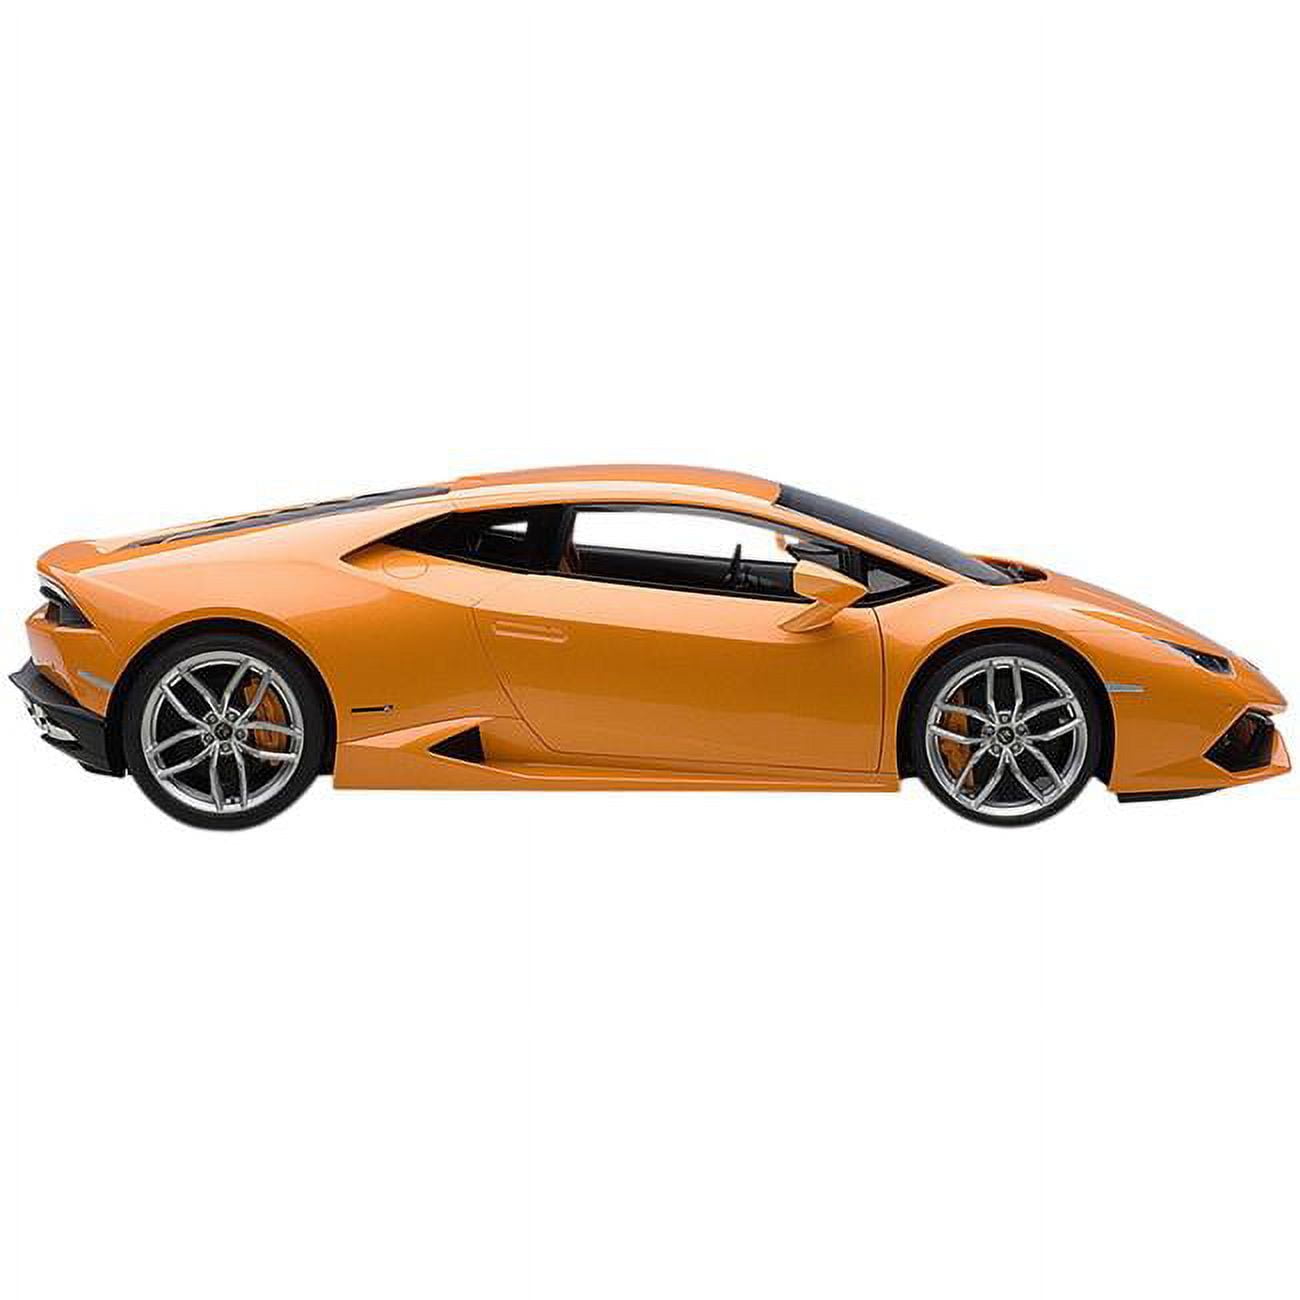 Picture of Autoart 12098 Lamborghini Huracan LP610-4 Arancio Borealis 4-Layer 1 by 12 Scale Model Car, Pearl Metallic Orange